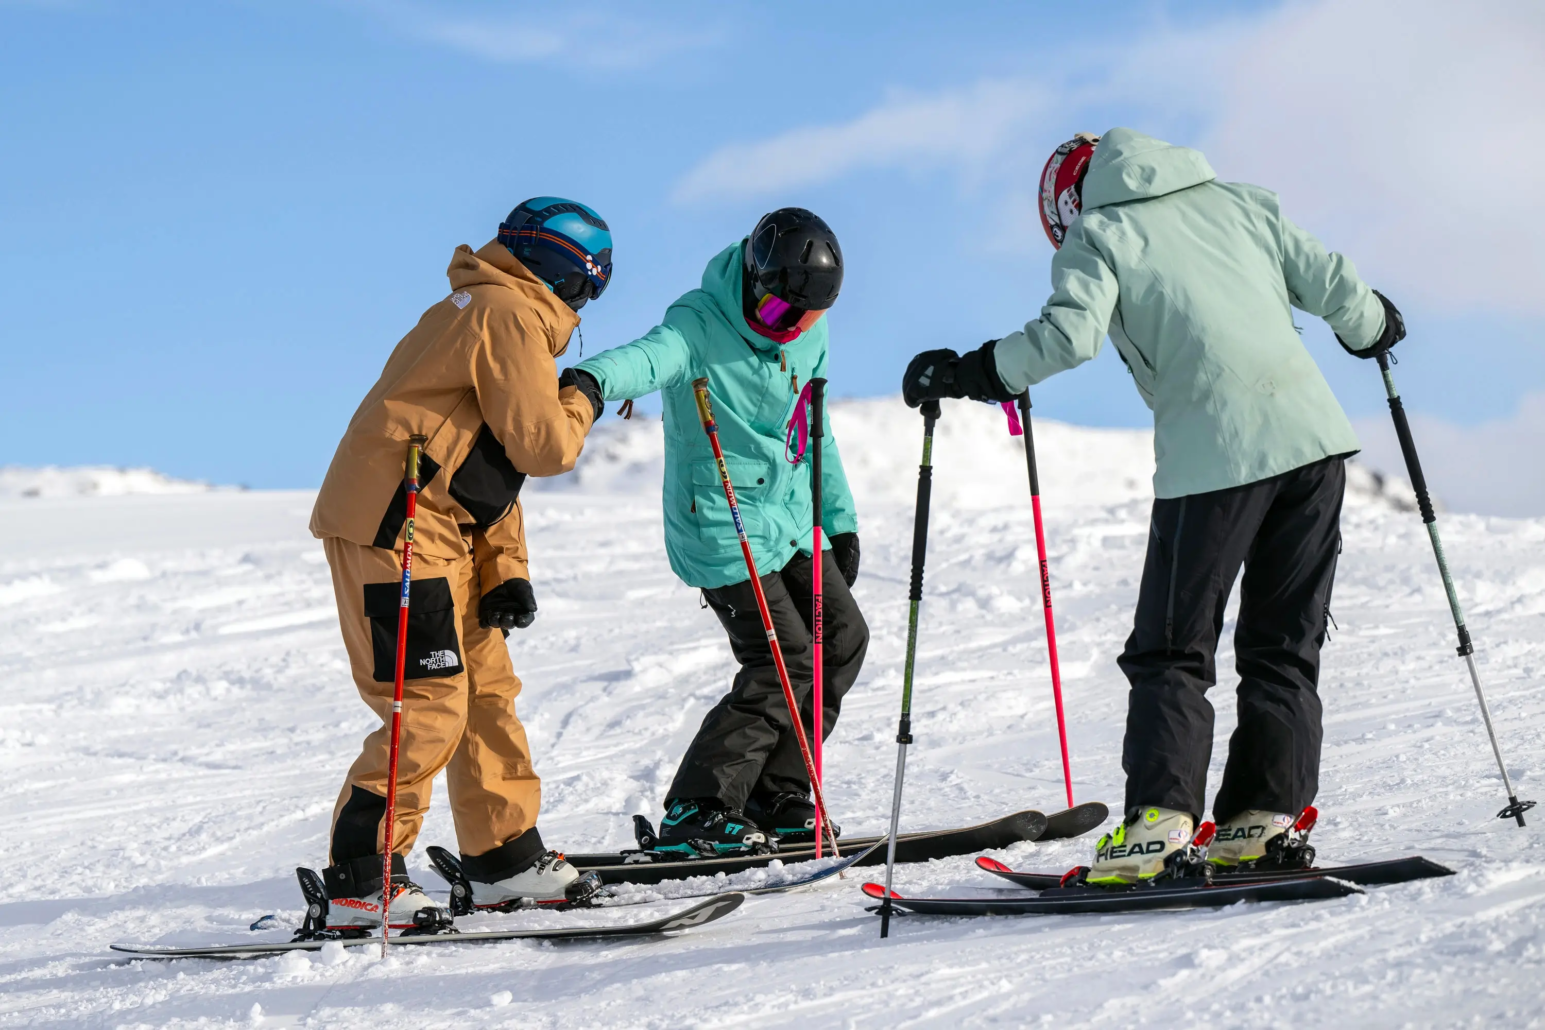 A ski instructor delivering technical feedback